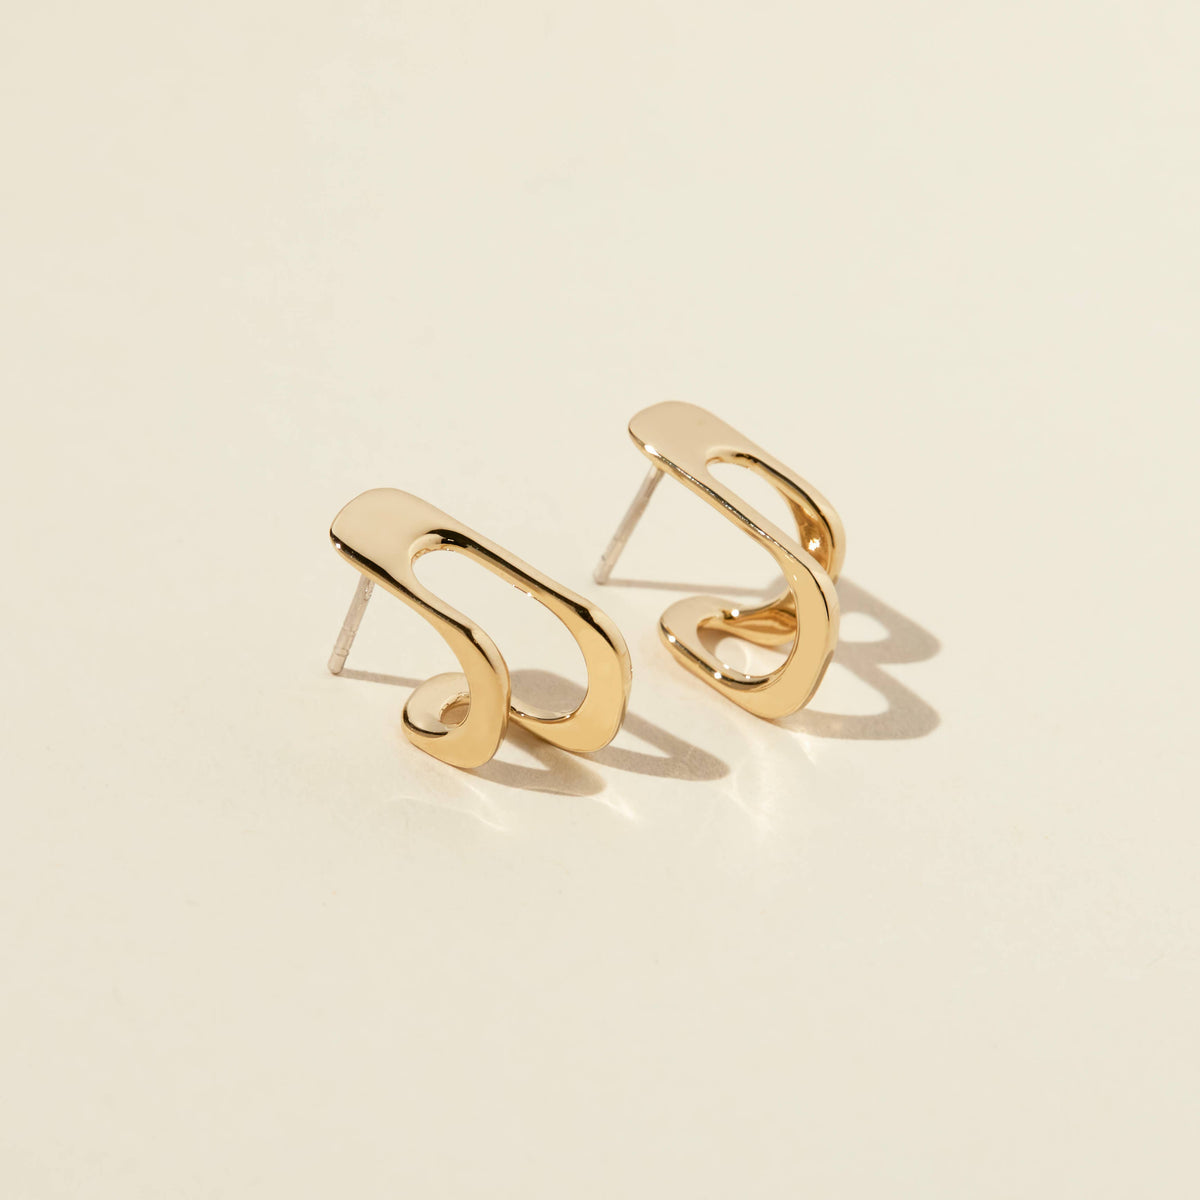 Ashland Earrings: Gold Plated